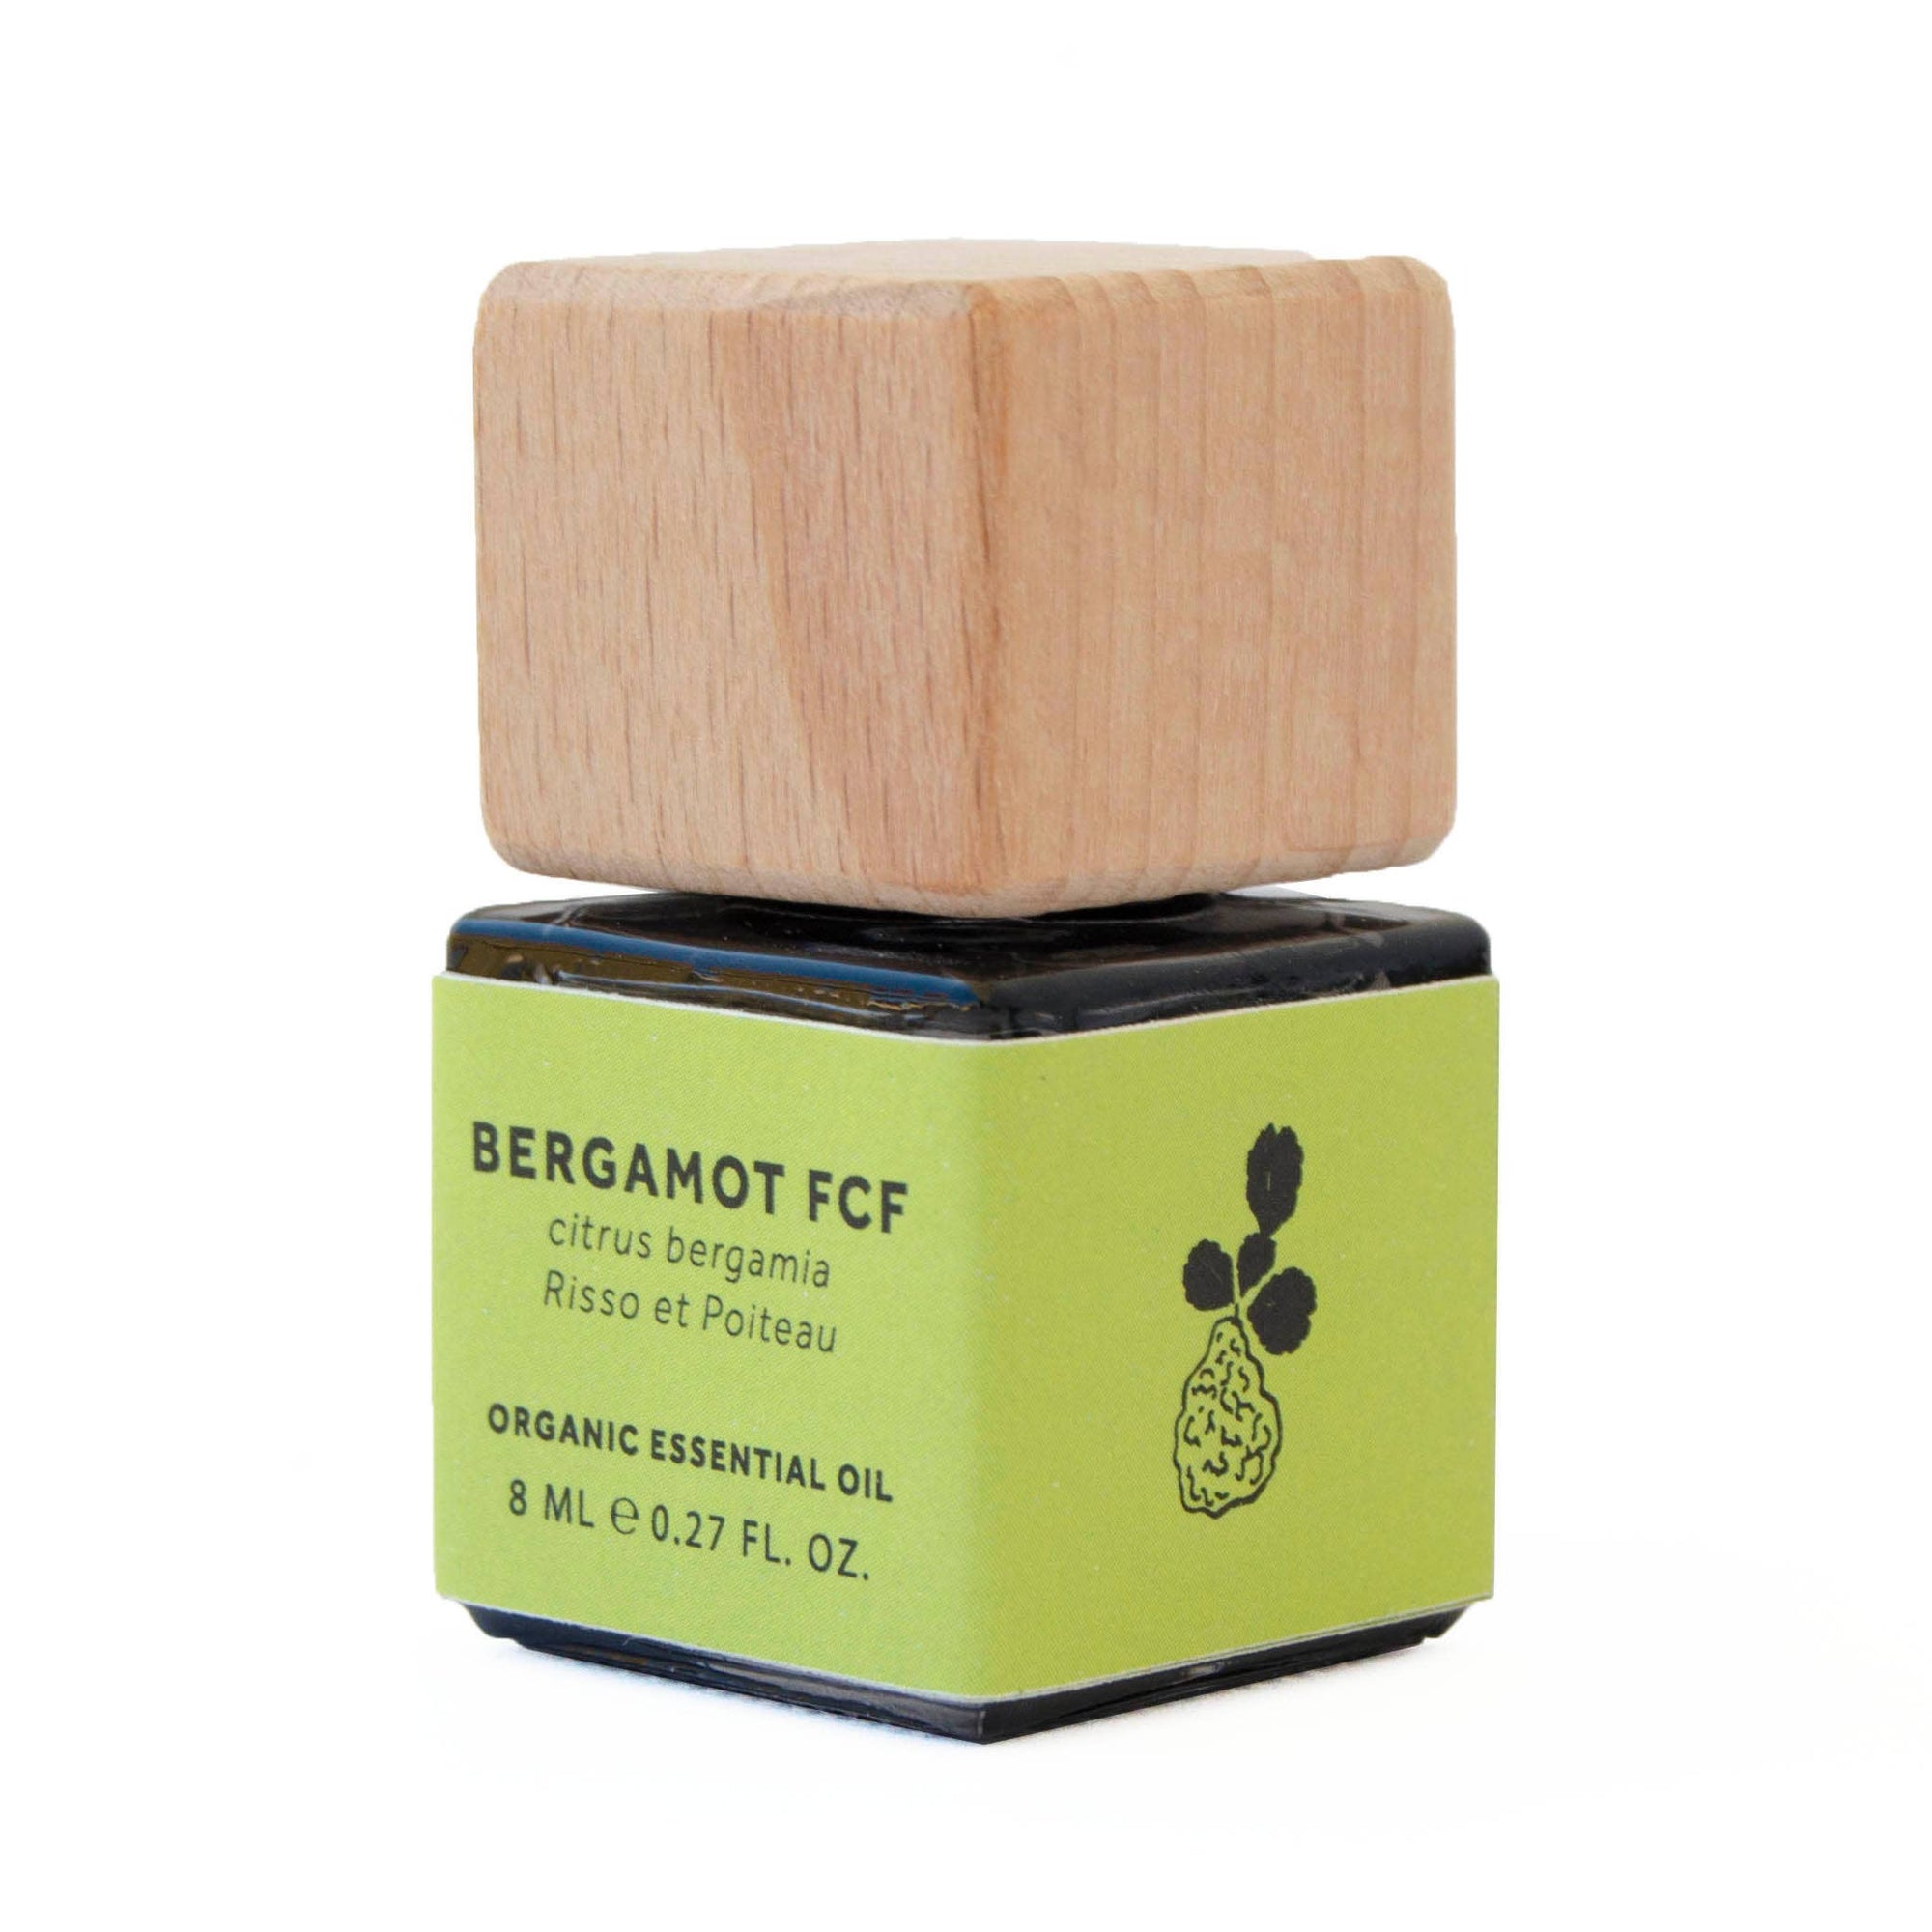 Bergamot FCF - Organic Essential Oil